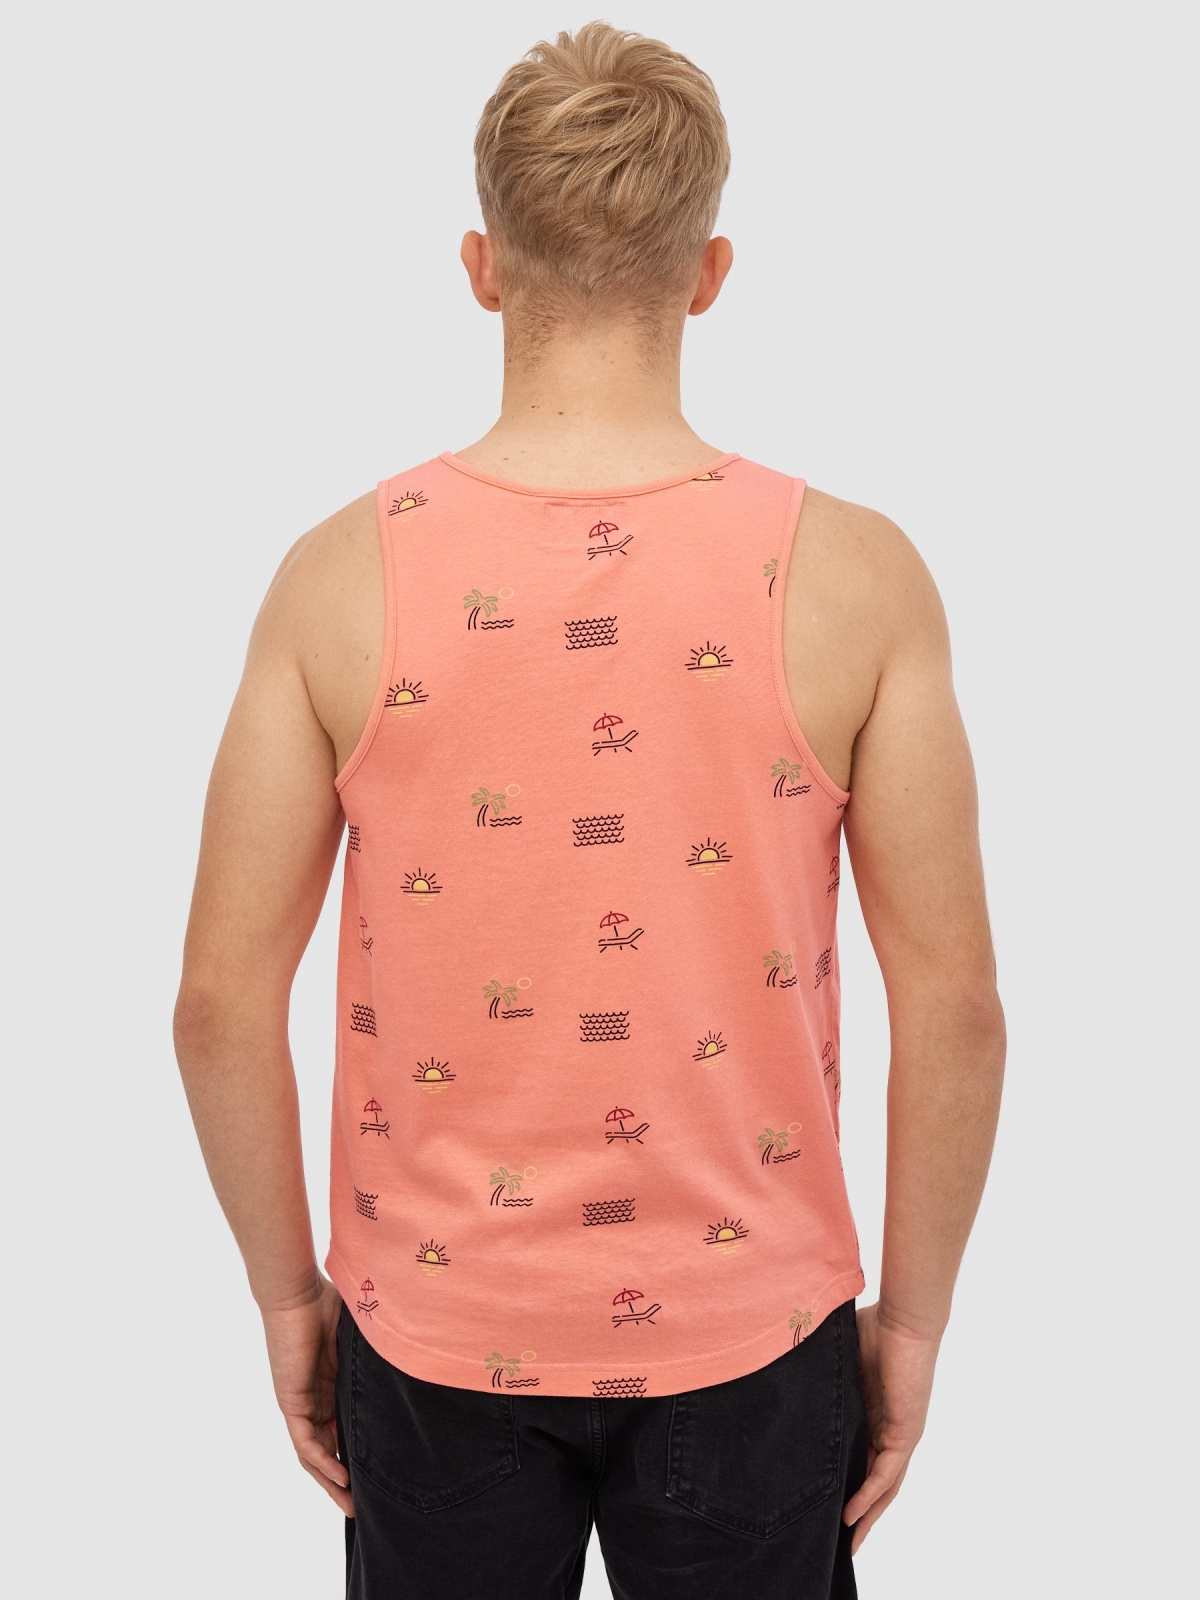 Camiseta de tirantes tropical rosa vista media trasera